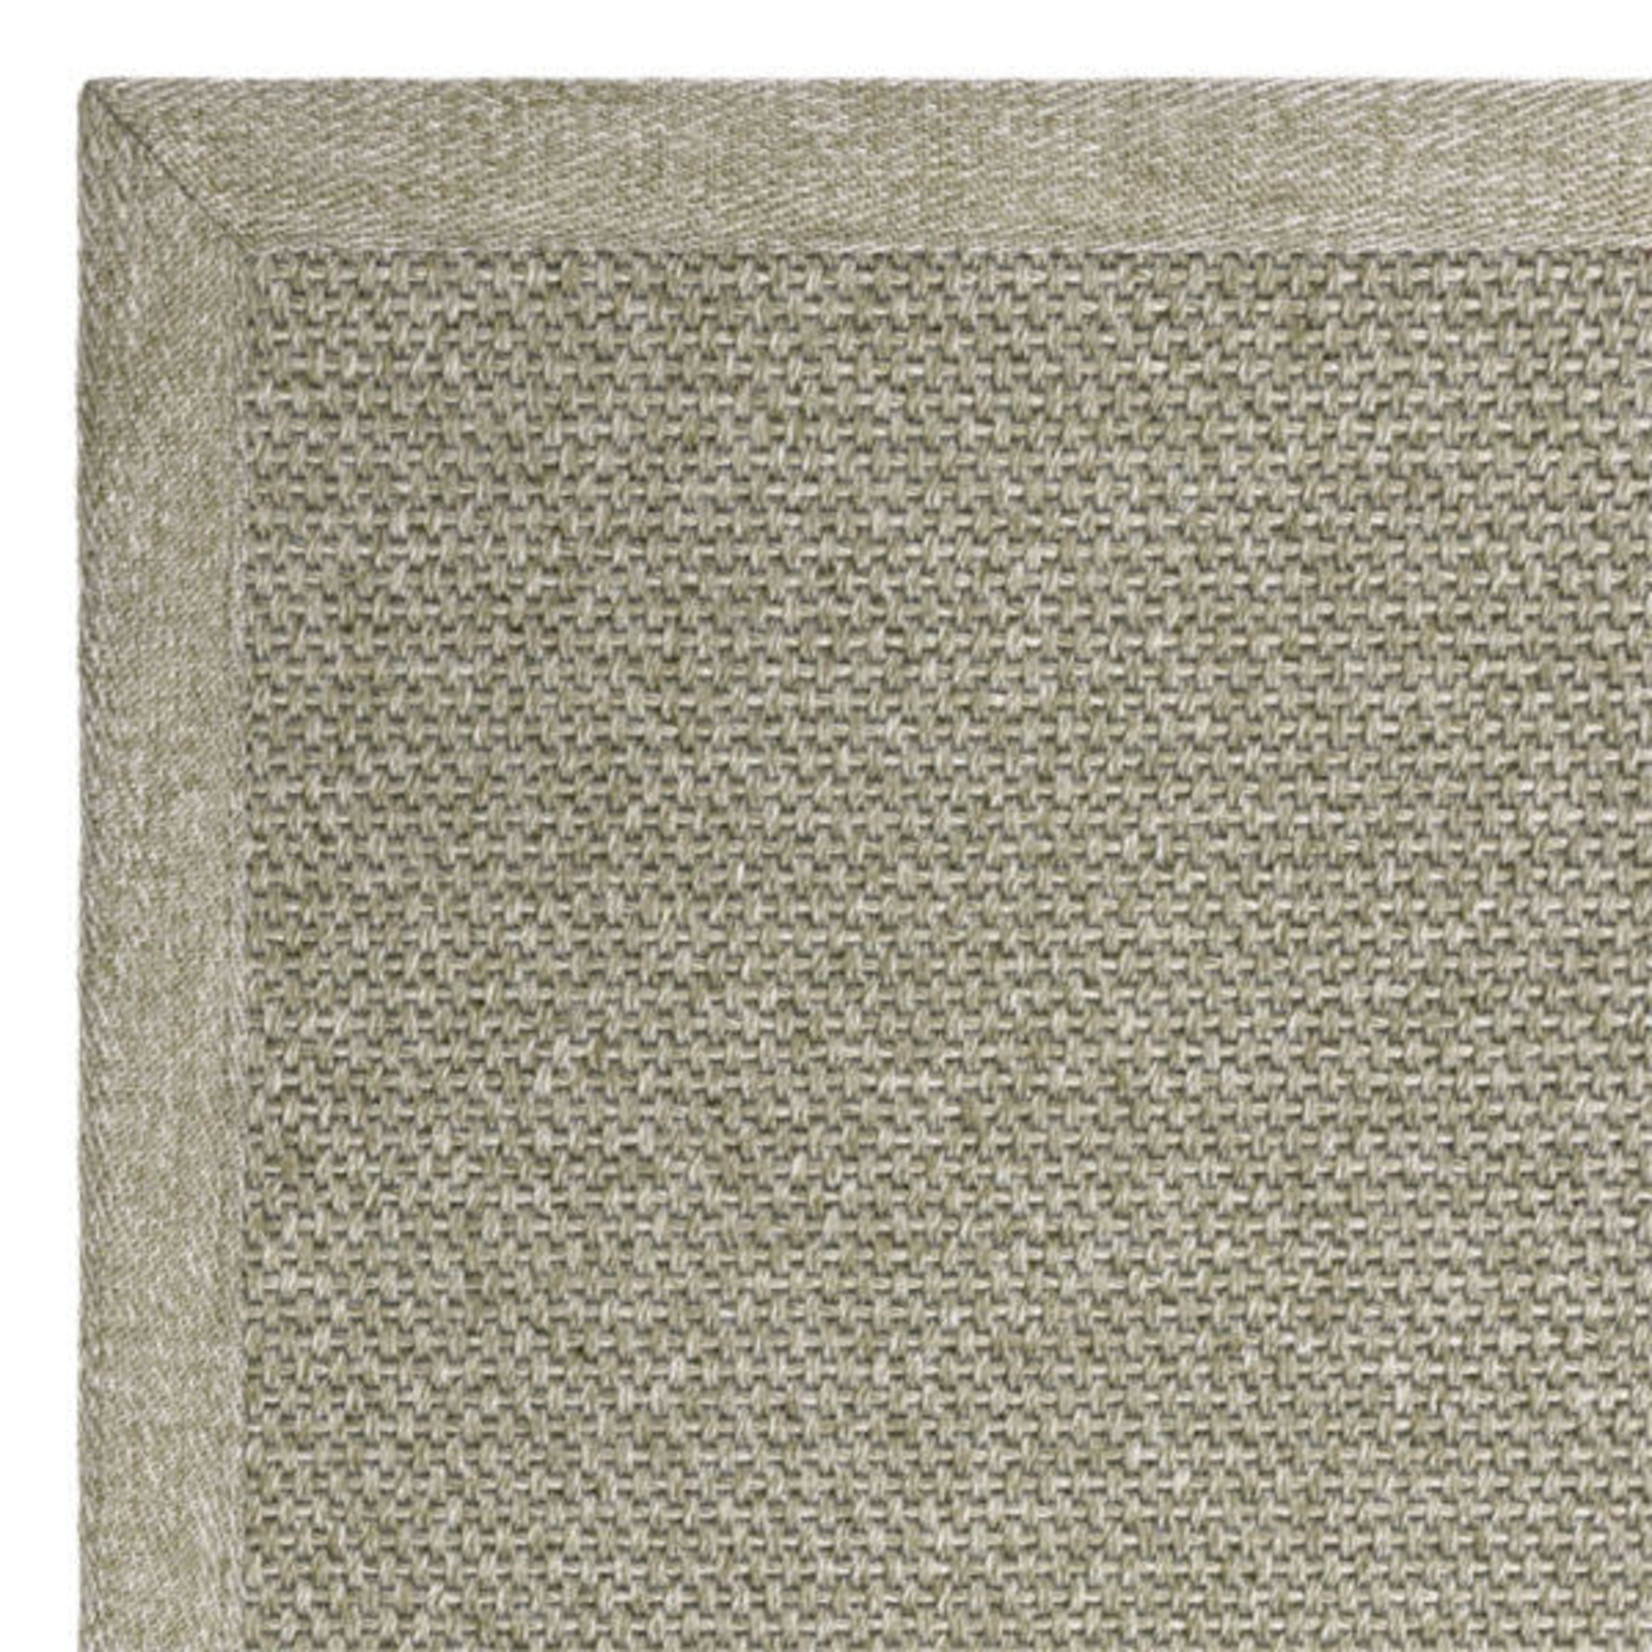 Lemont Outdoor Teppich 200x300cm, Farbe Lite Wheat mit Fassung Rustic Wheat